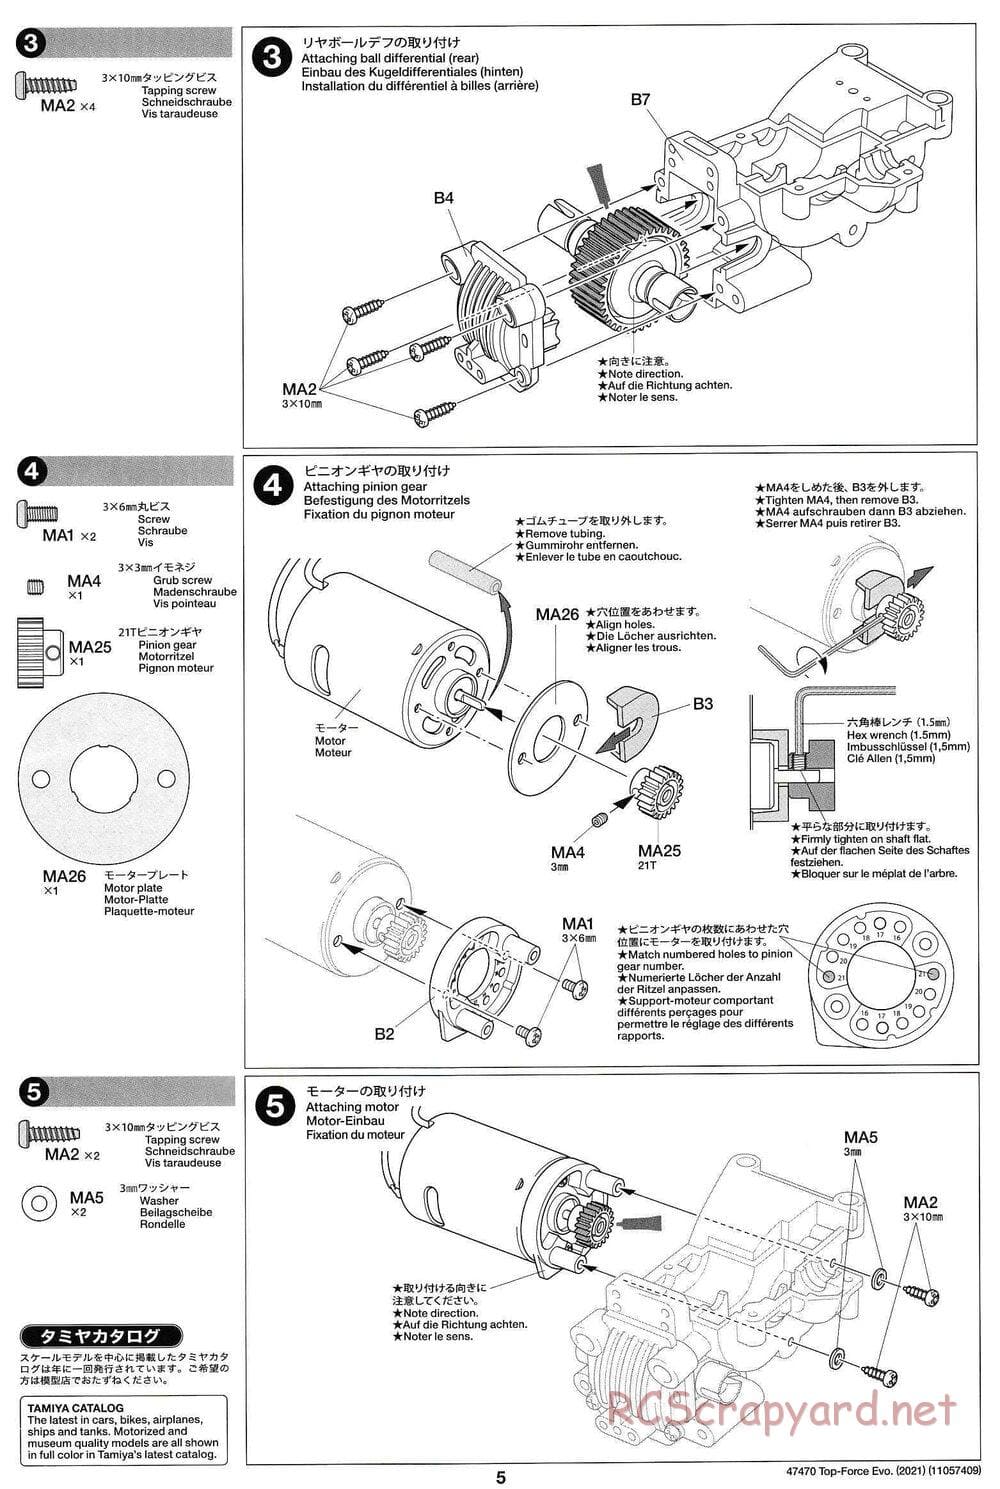 Tamiya - Top Force Evo 2021 - DF-01 Chassis - Manual - Page 5